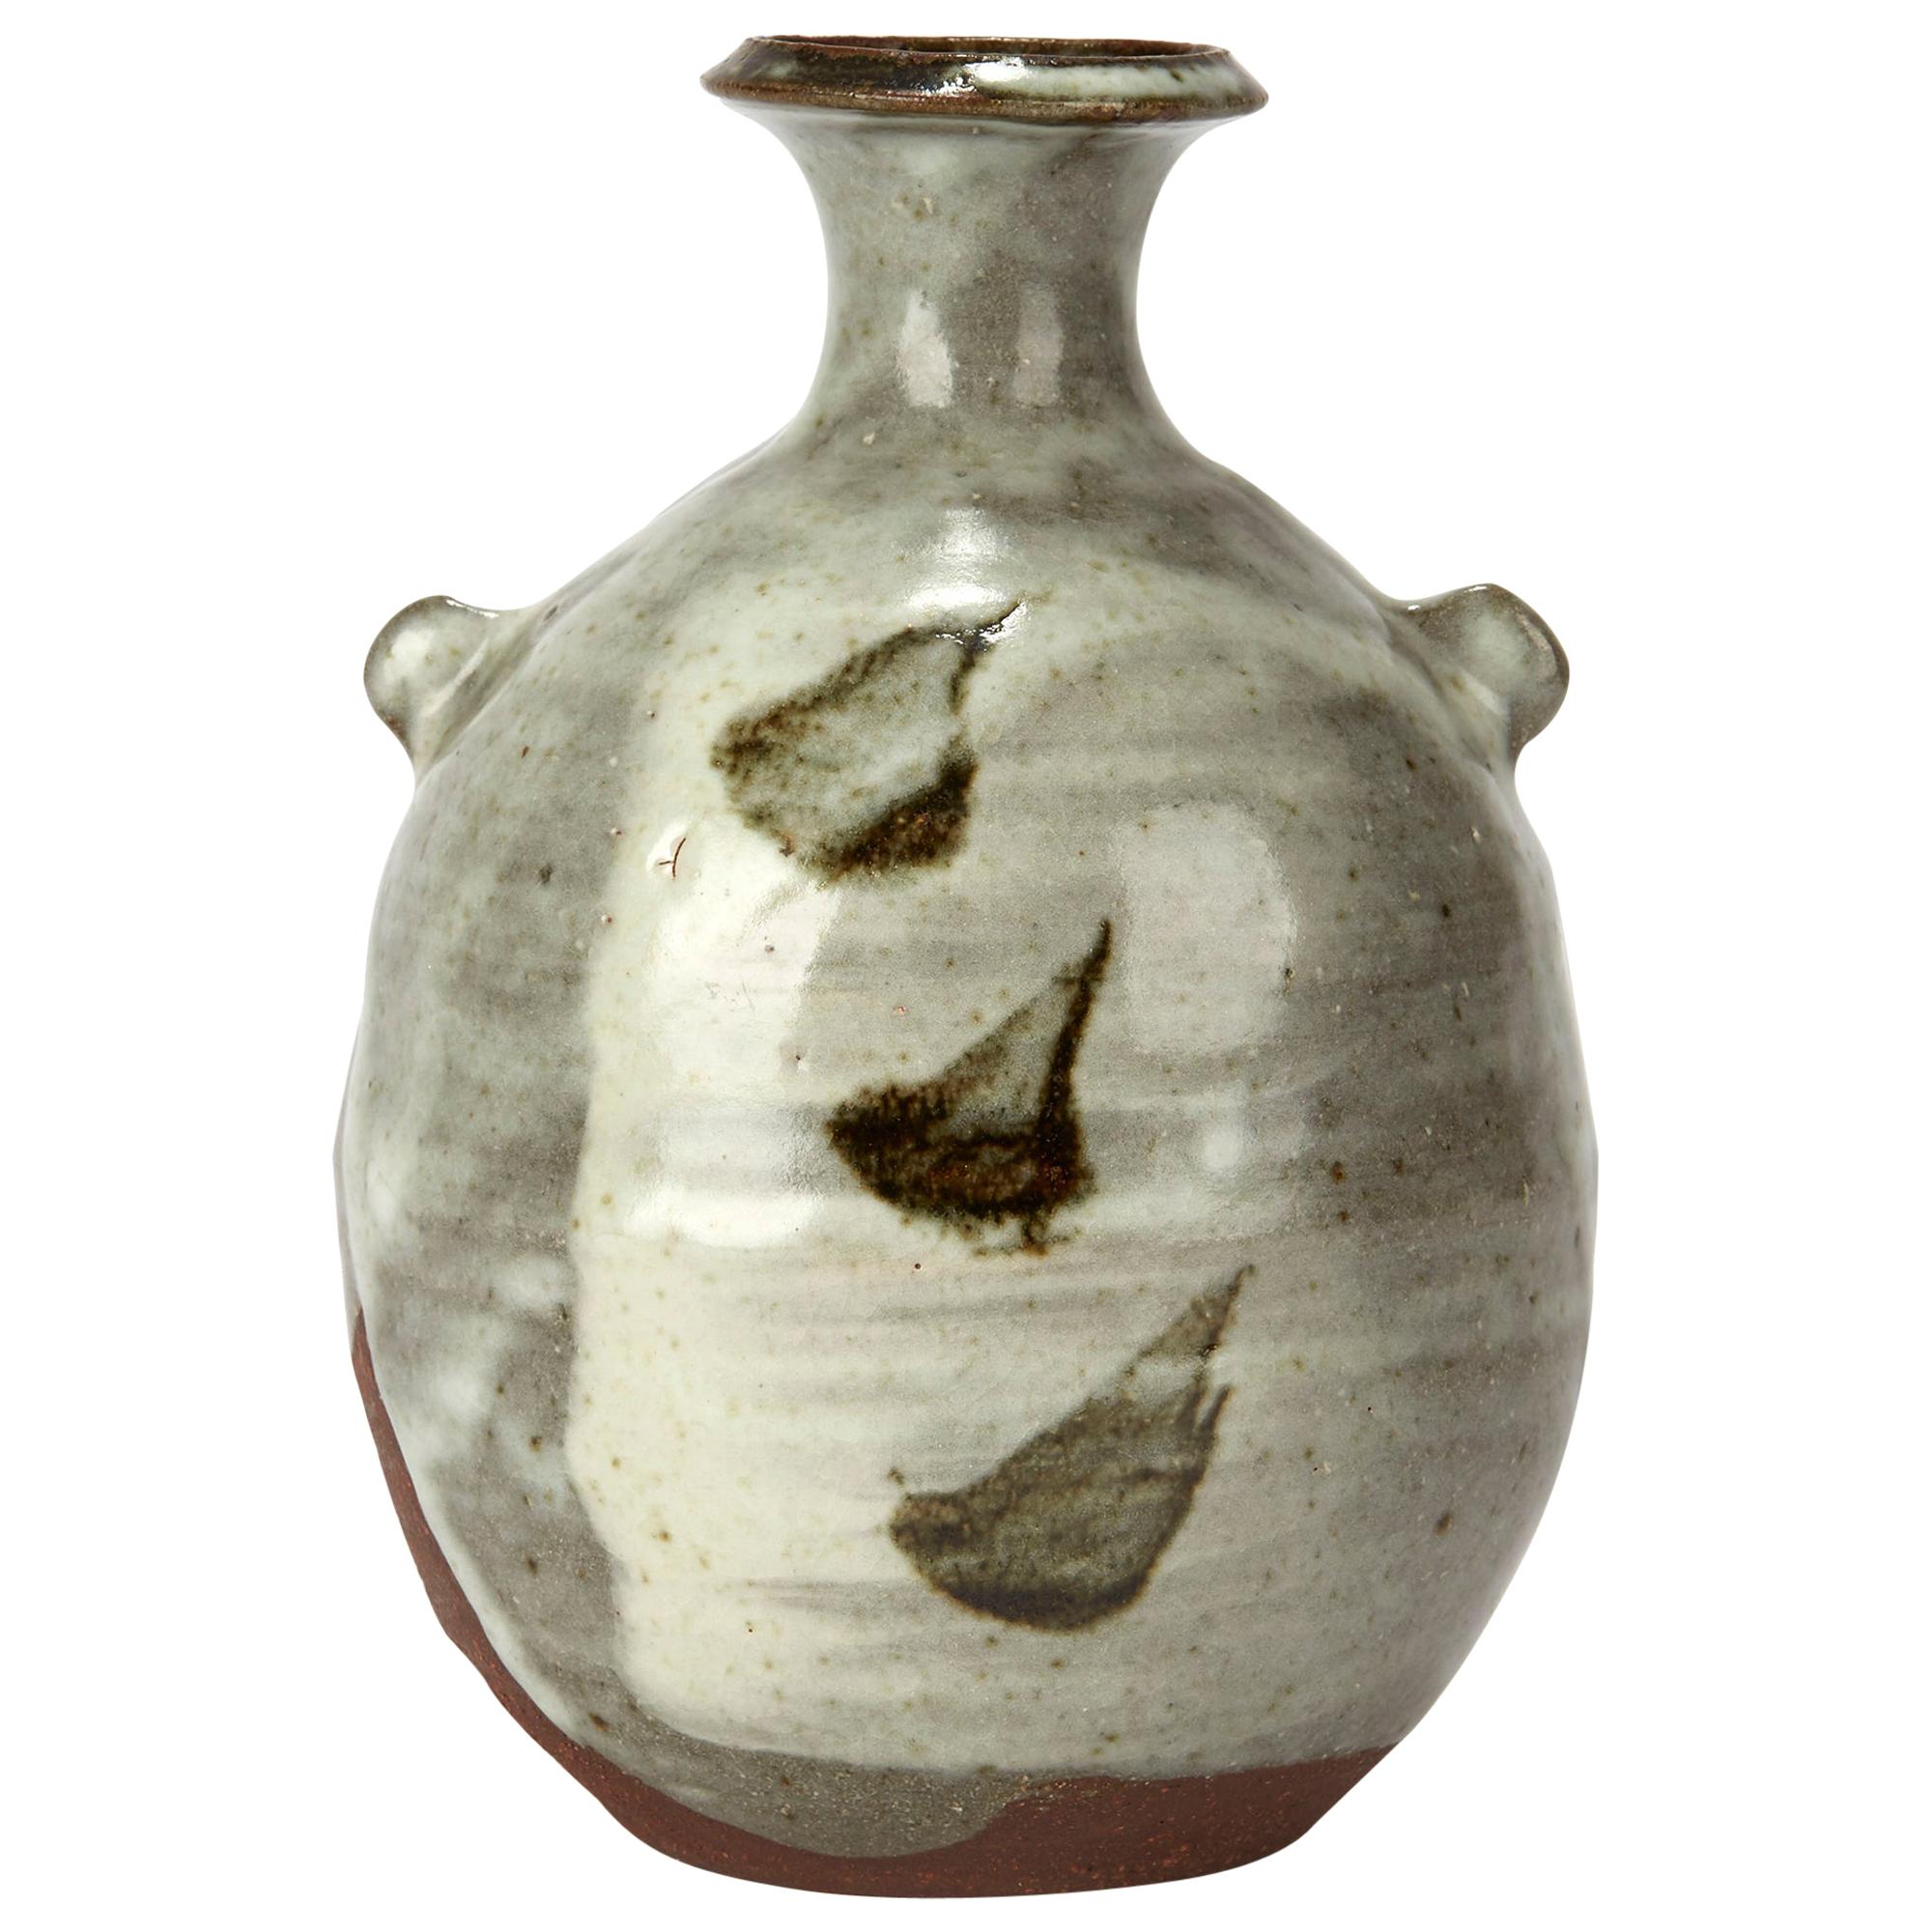 Janet Leach Grey and White Stoneware Studio Pottery Glazed Bottle Vase